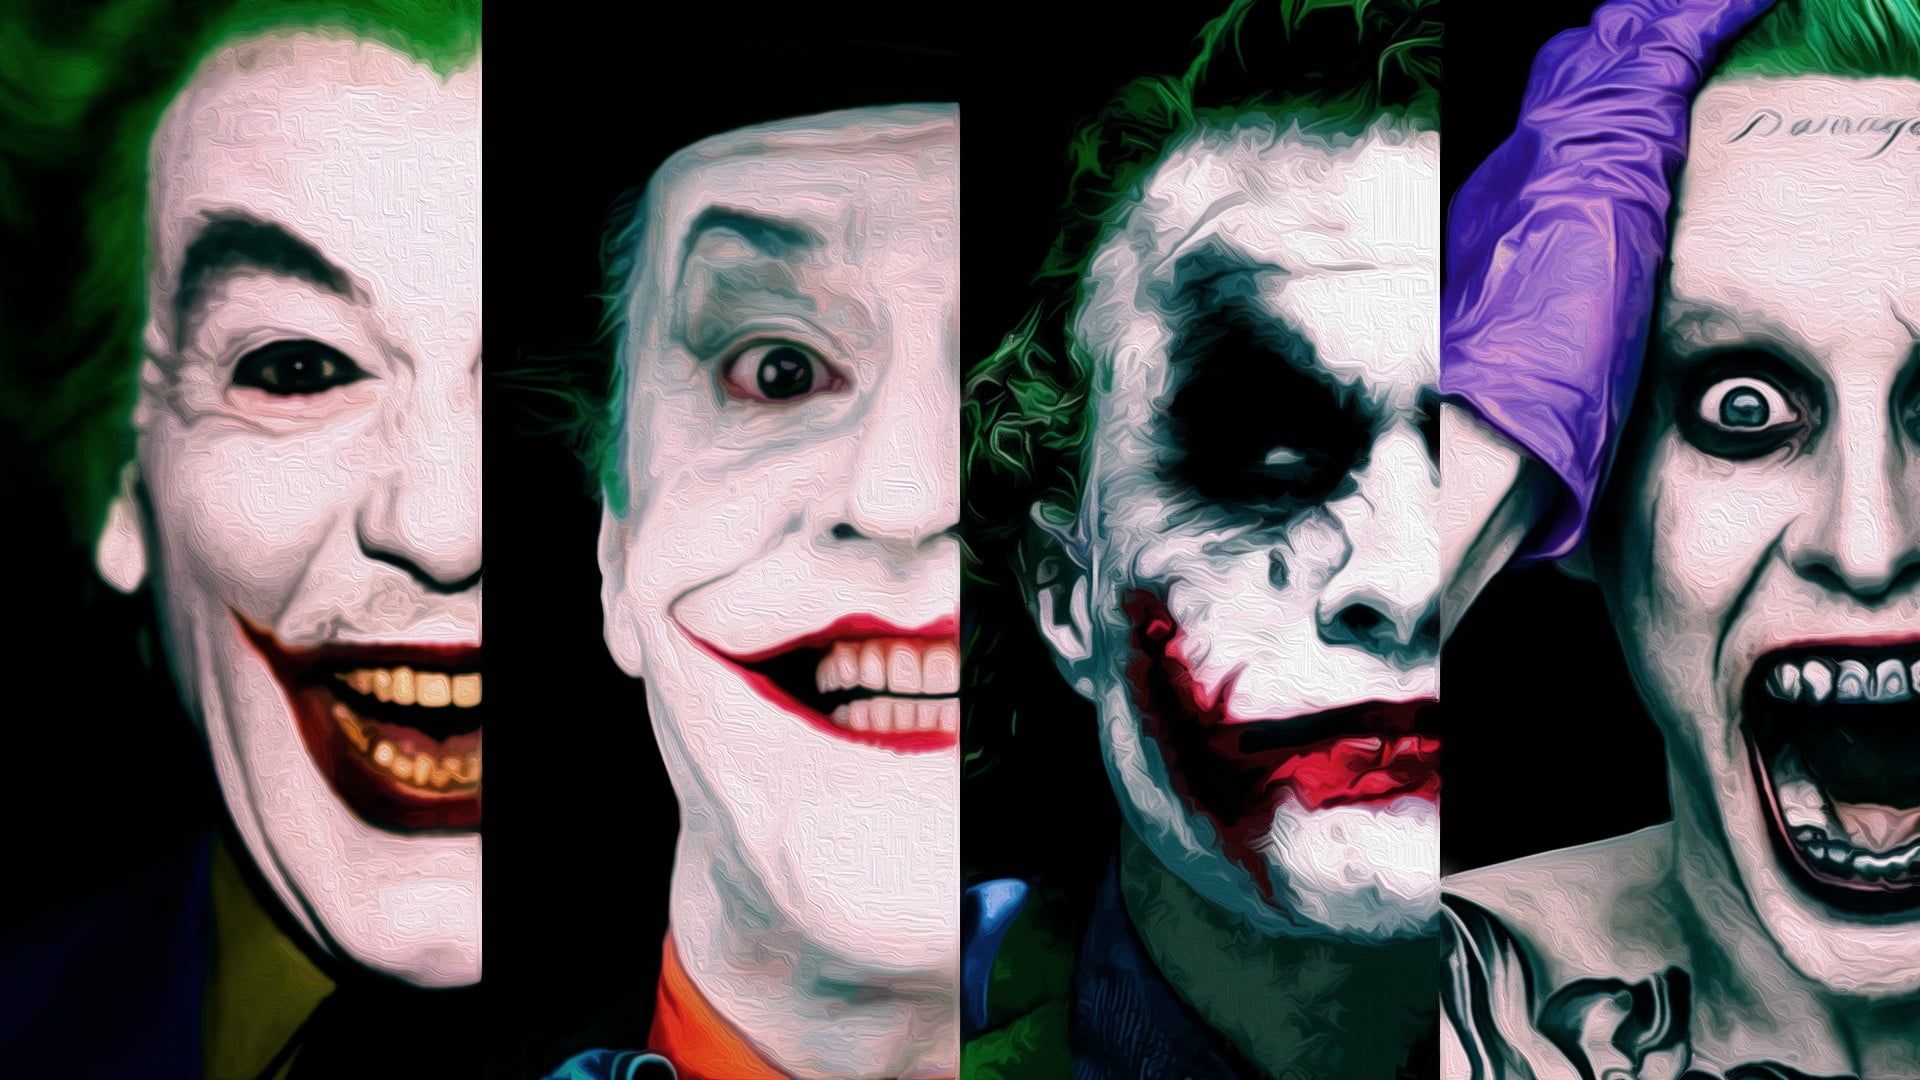 The Joker collage